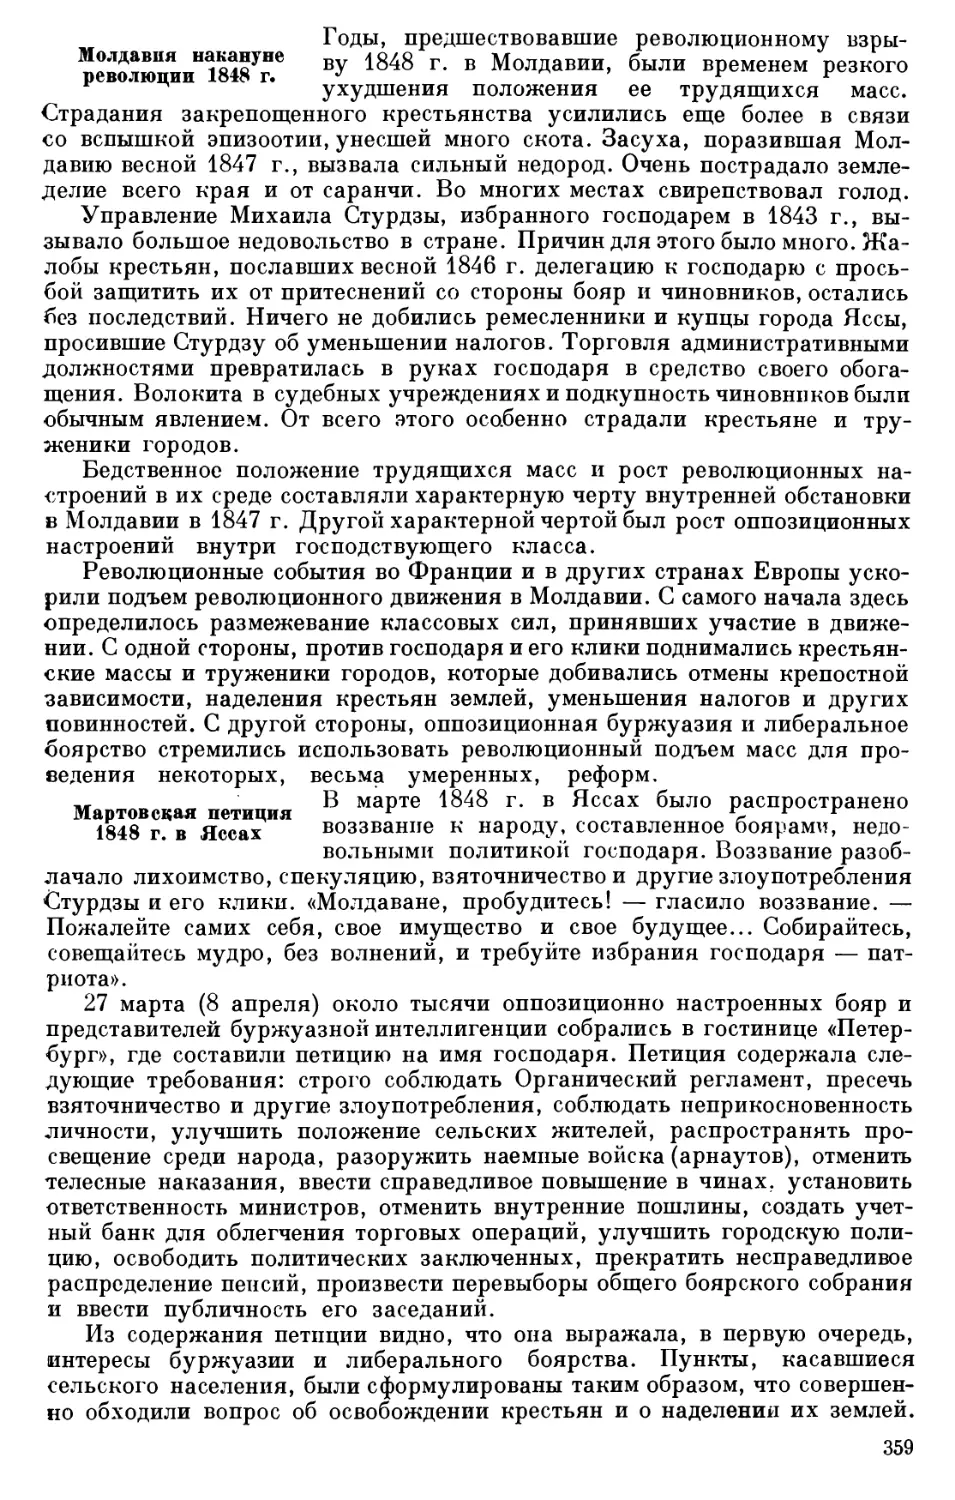 Молдавия накануне революции 1848 г.
Мартовская петиция 1848 г. в Яссах.